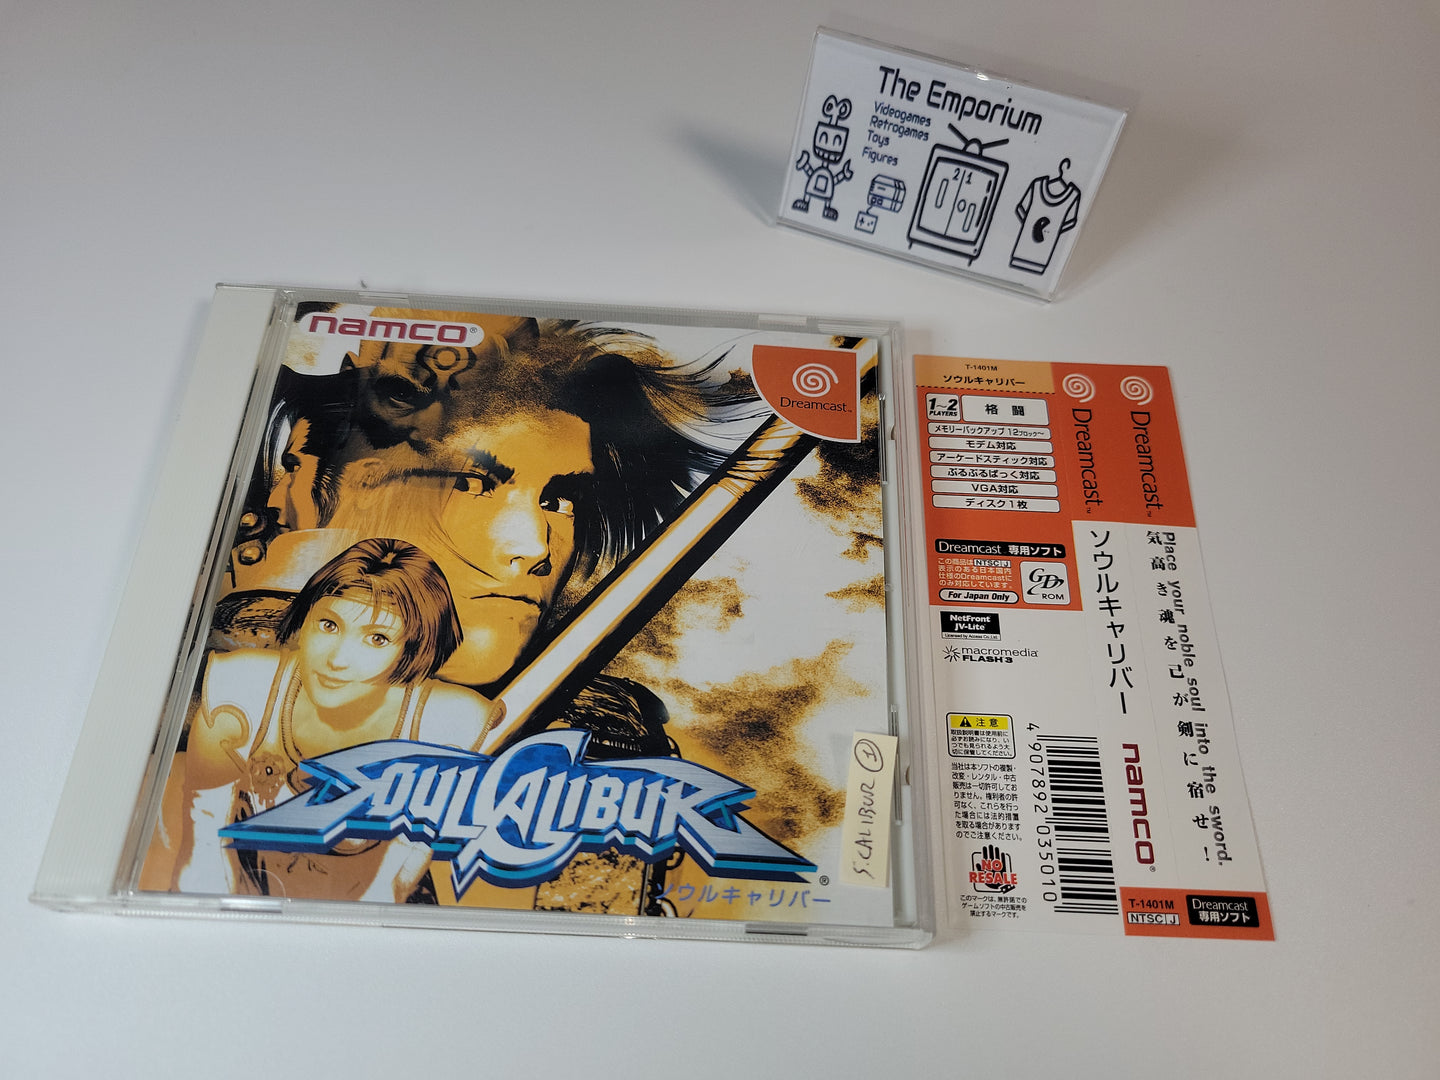 SoulCalibur - Sega dc Dreamcast